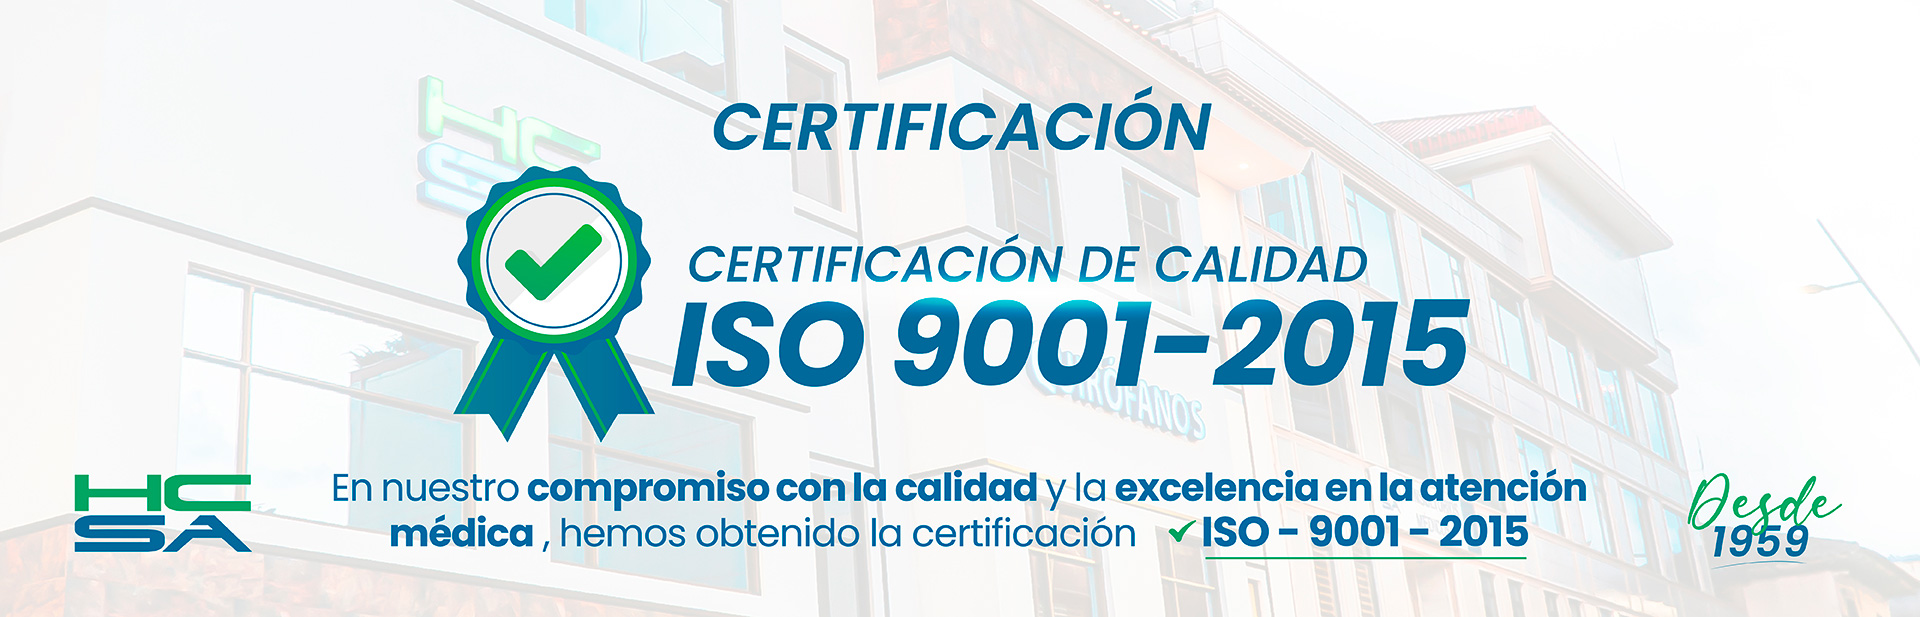 Certificación de calidad ISO 9001 - 2015 | Hospital Clínica San Agustín